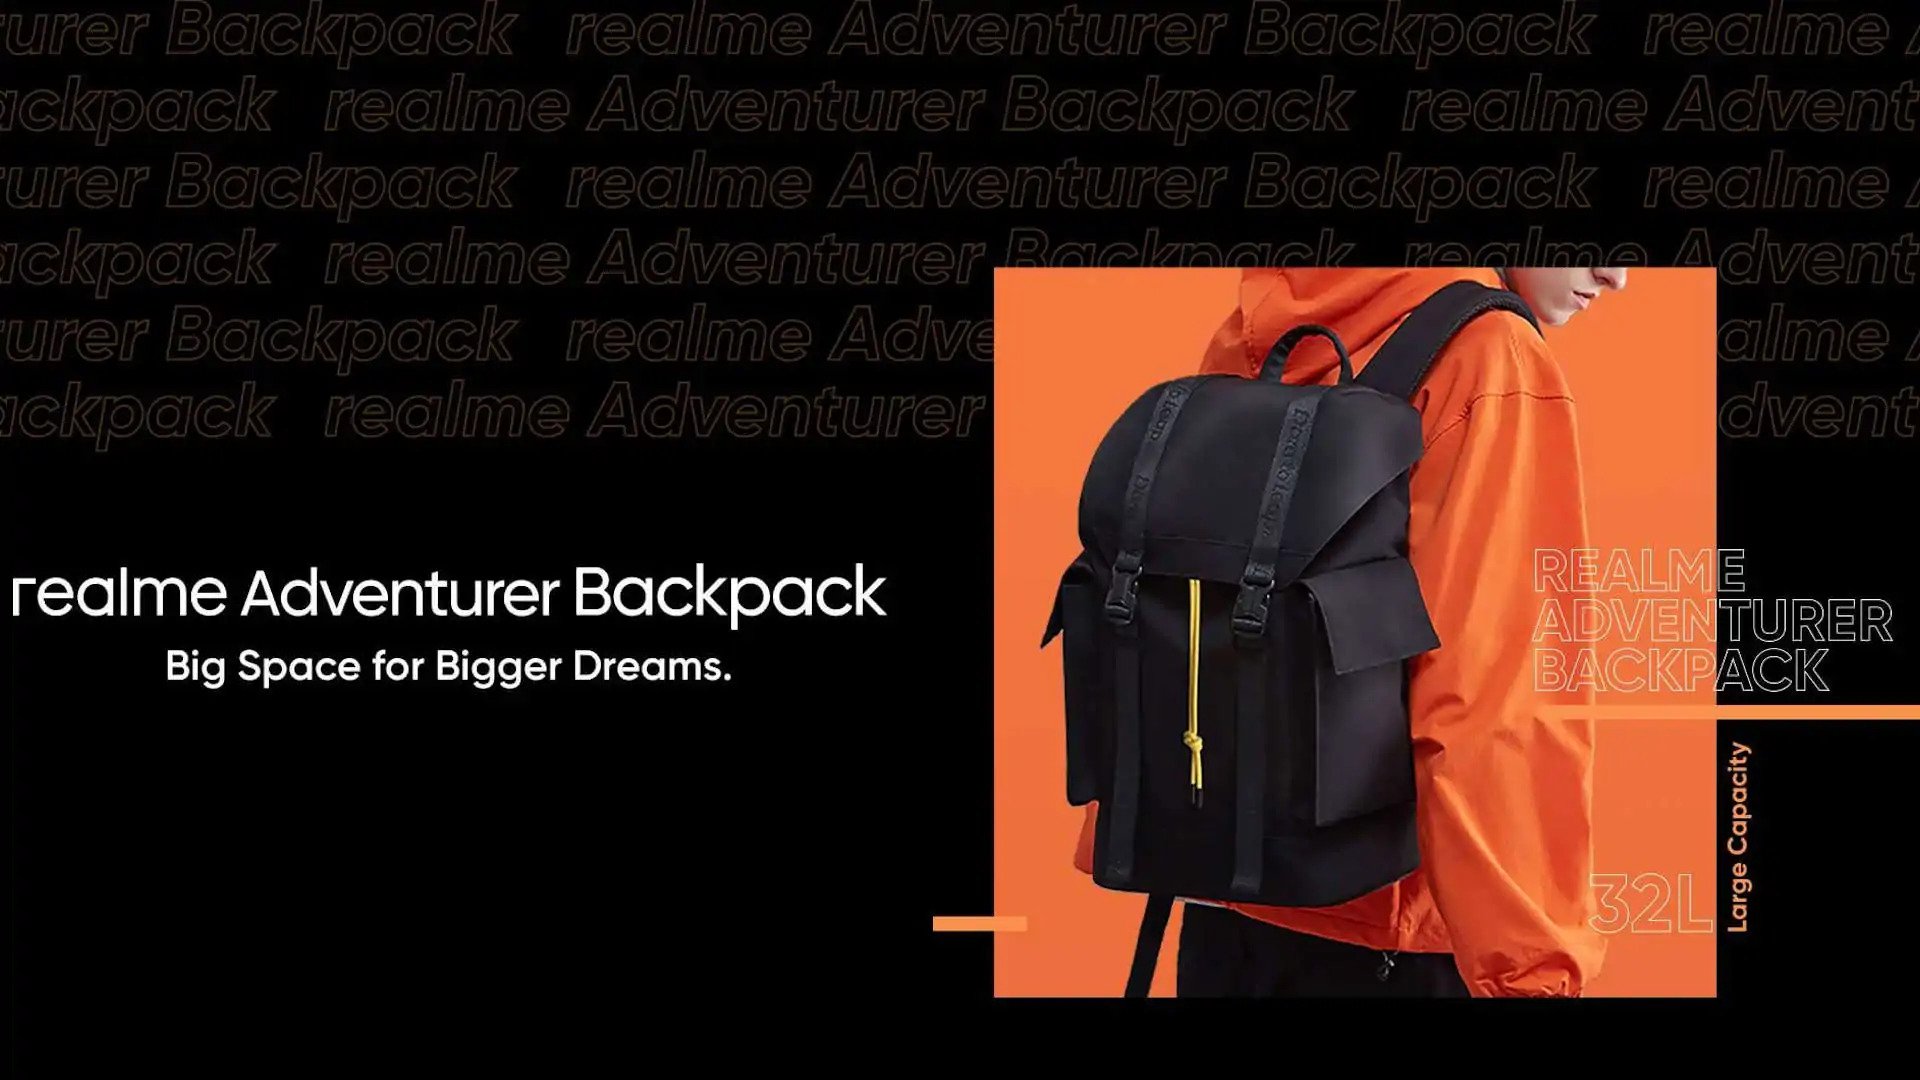 Realme Adventure Backpack